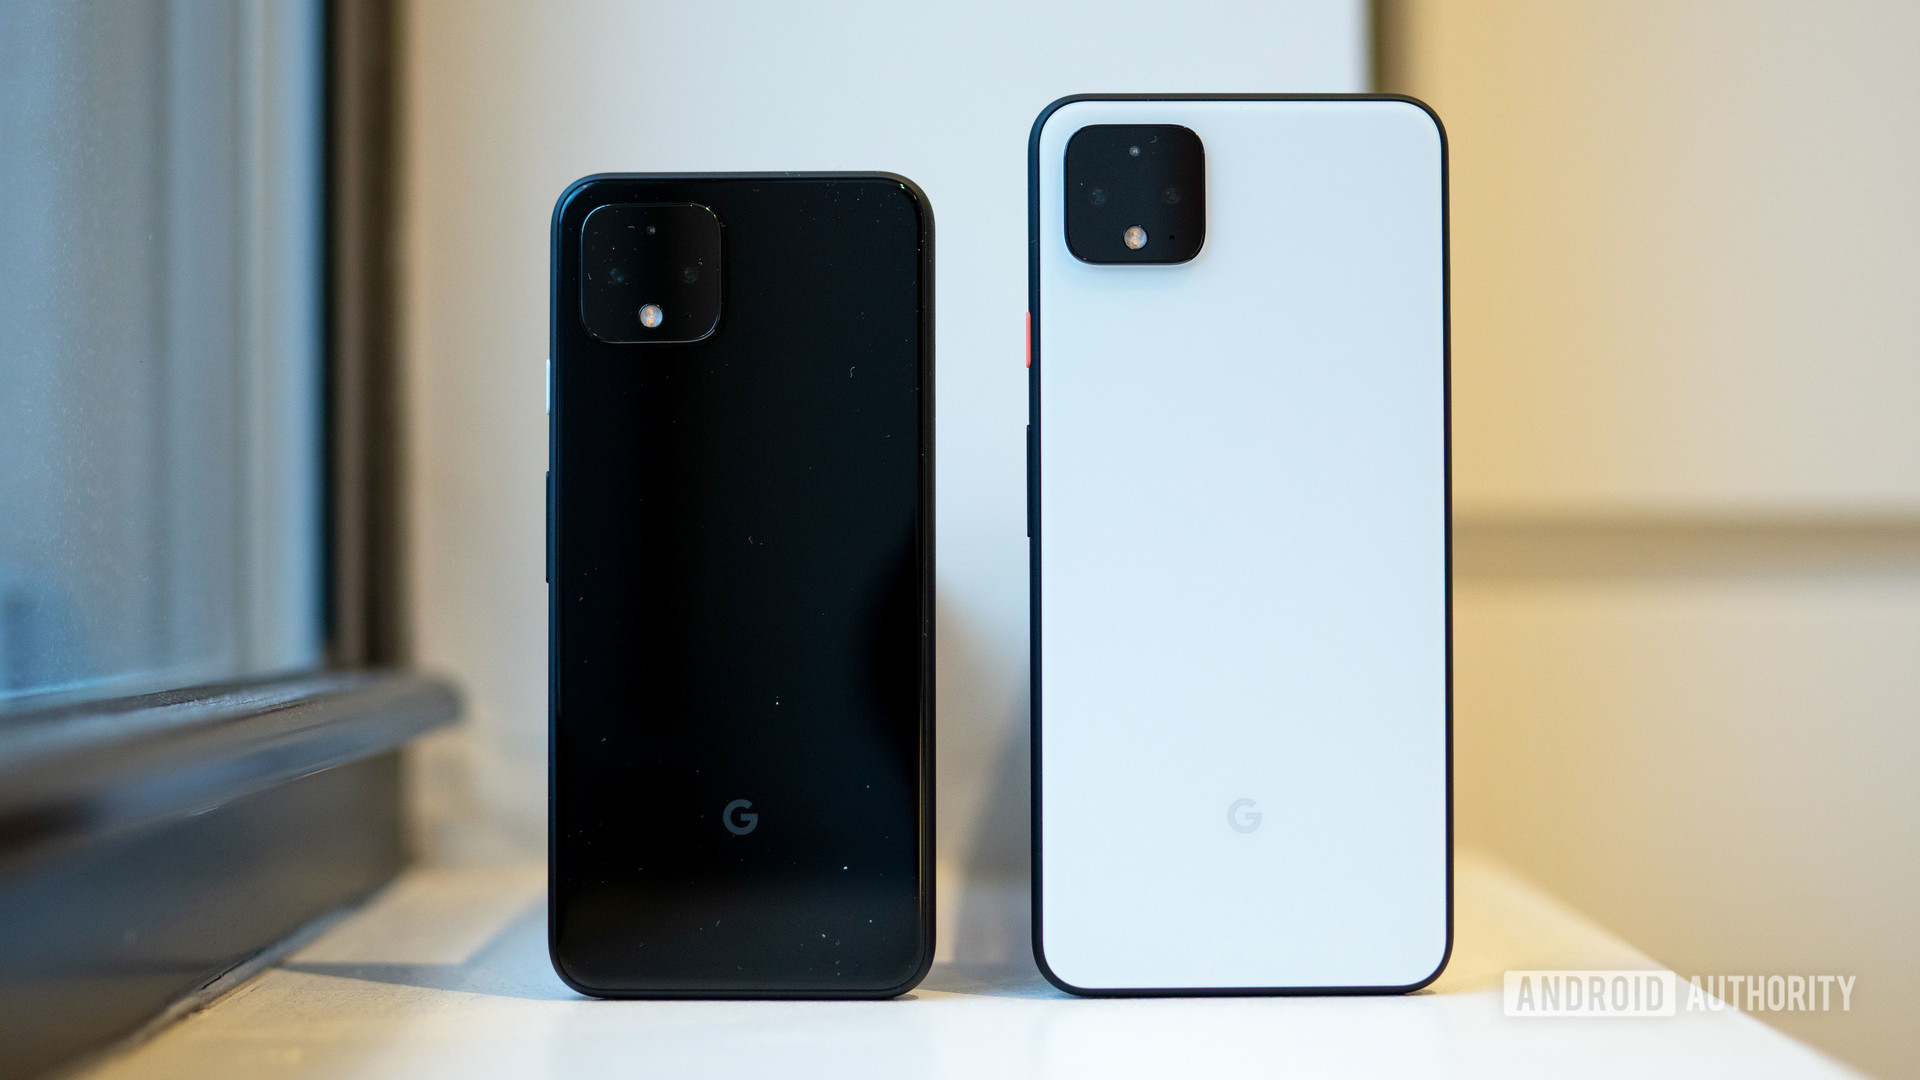 Google Pixel 4 vs Google Pixel 4 XL from the back